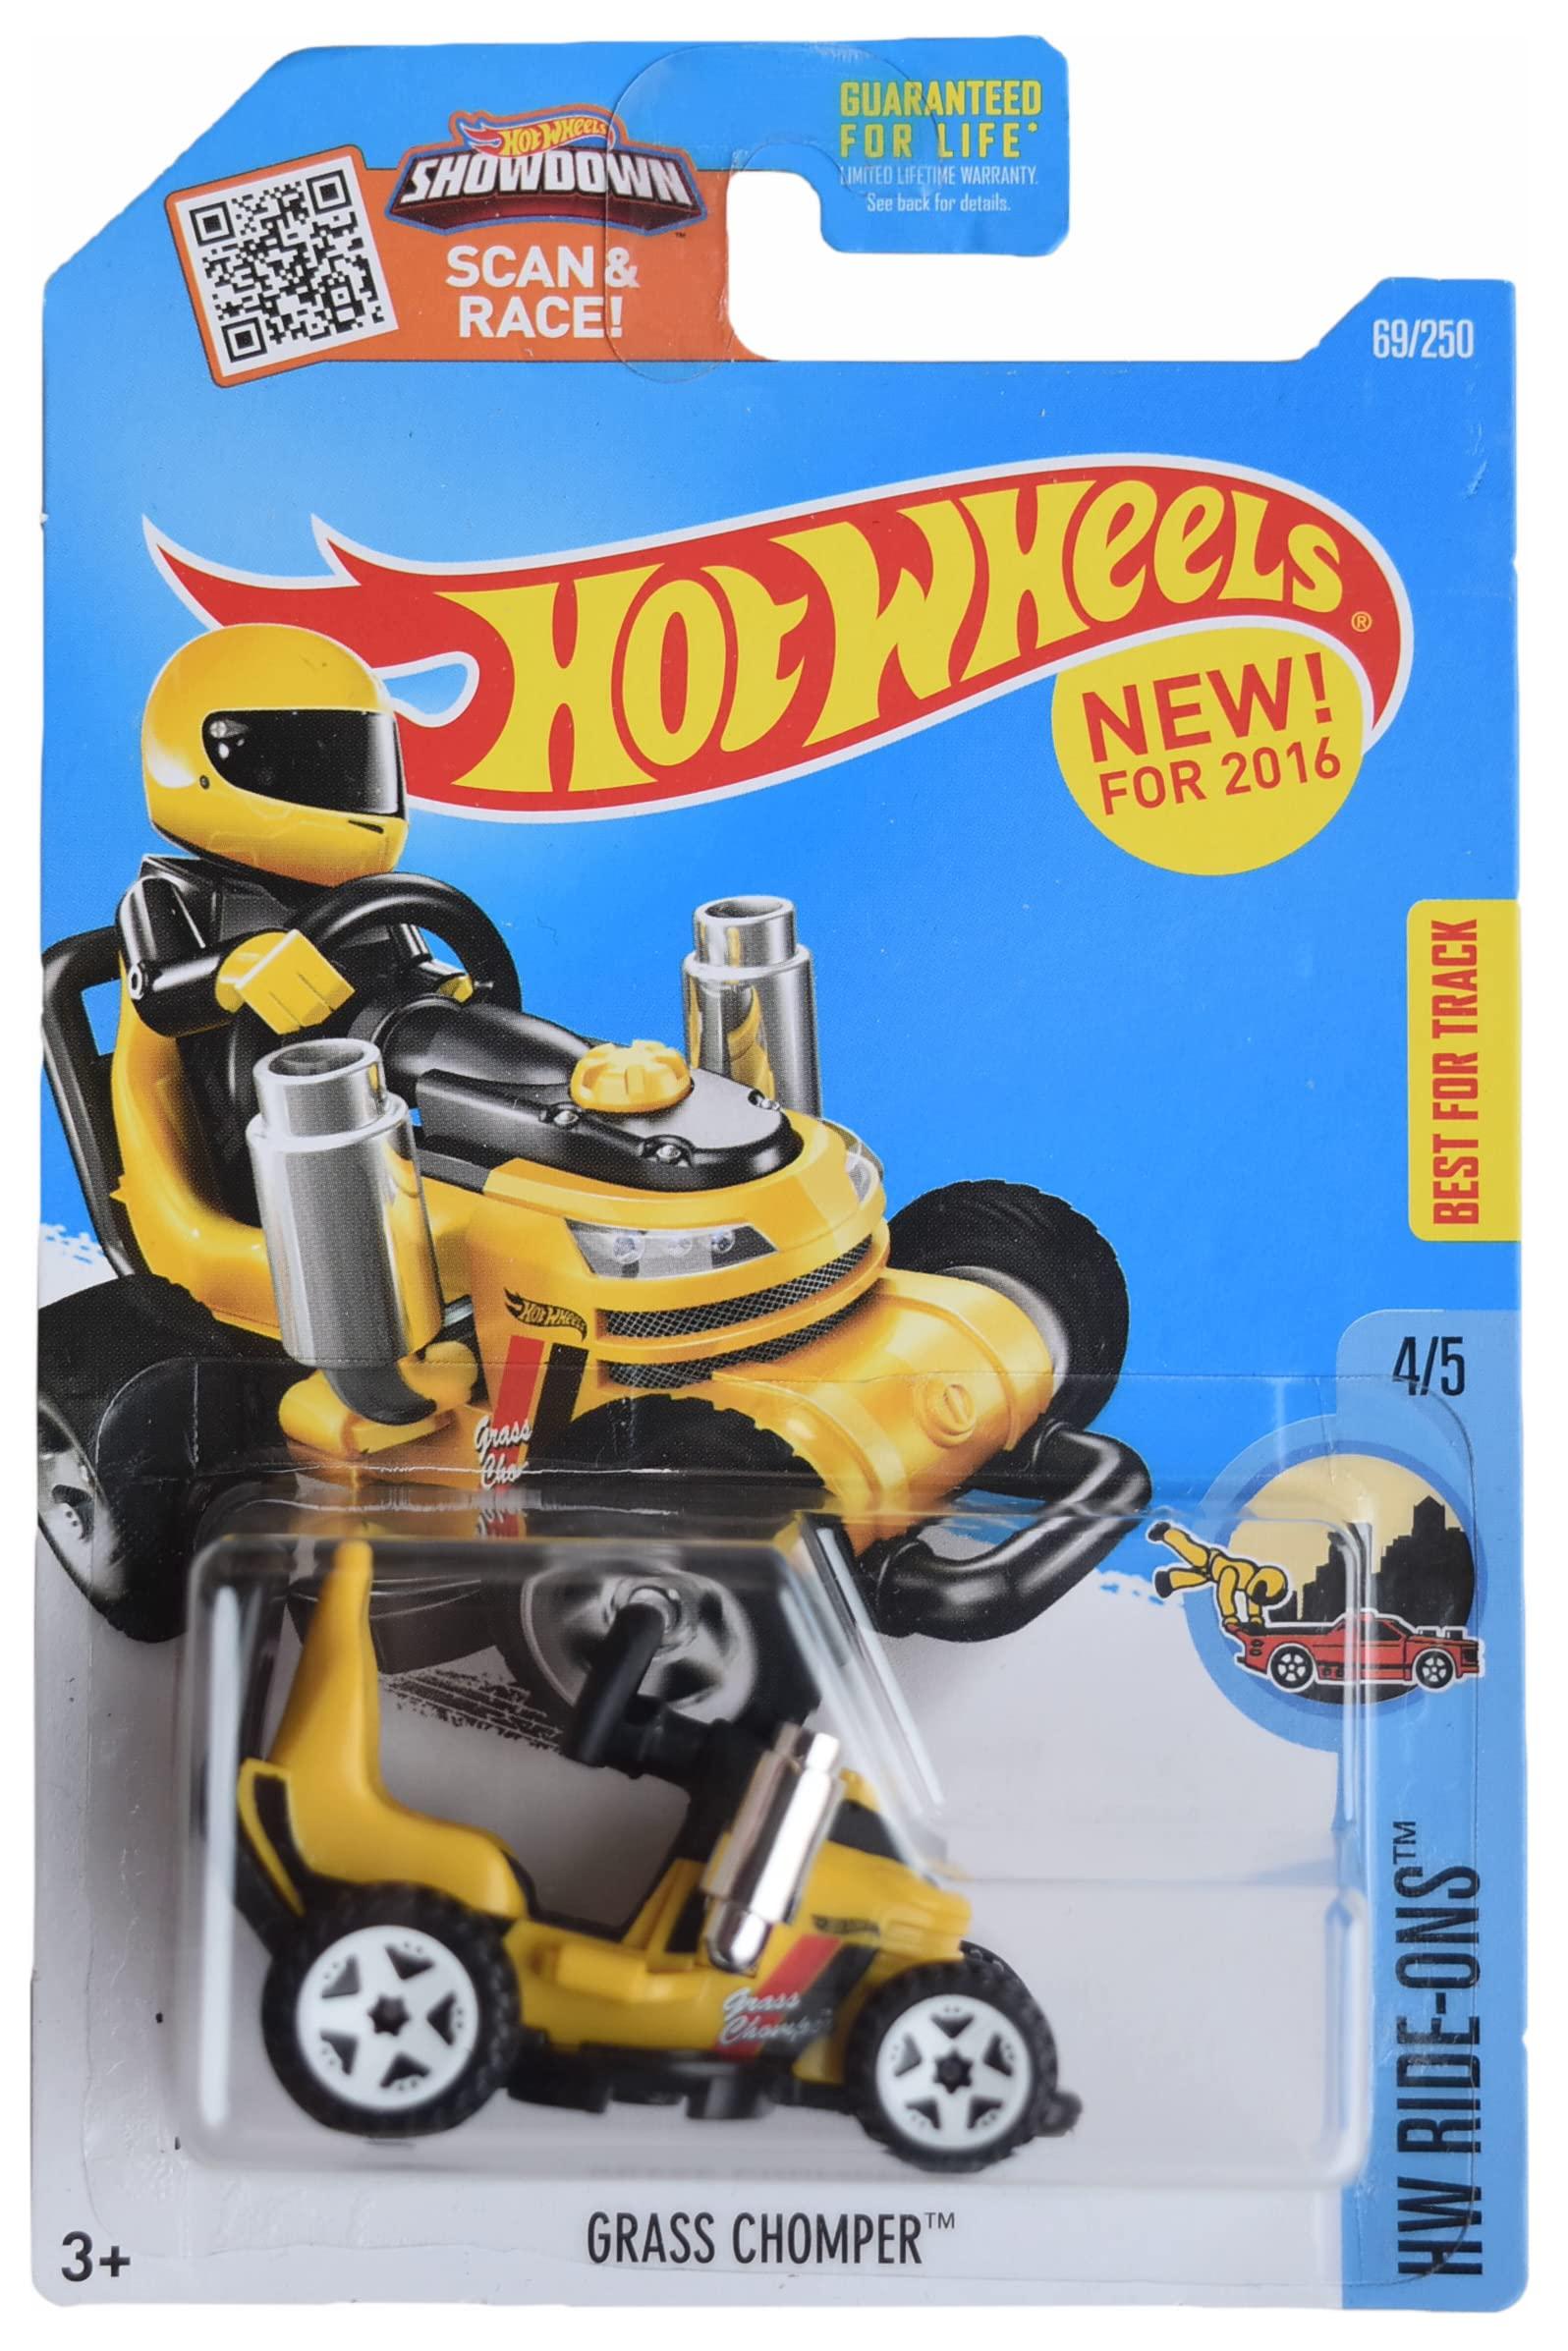 hot wheels grass chomper - ride ons 4/5 yellow 69/250